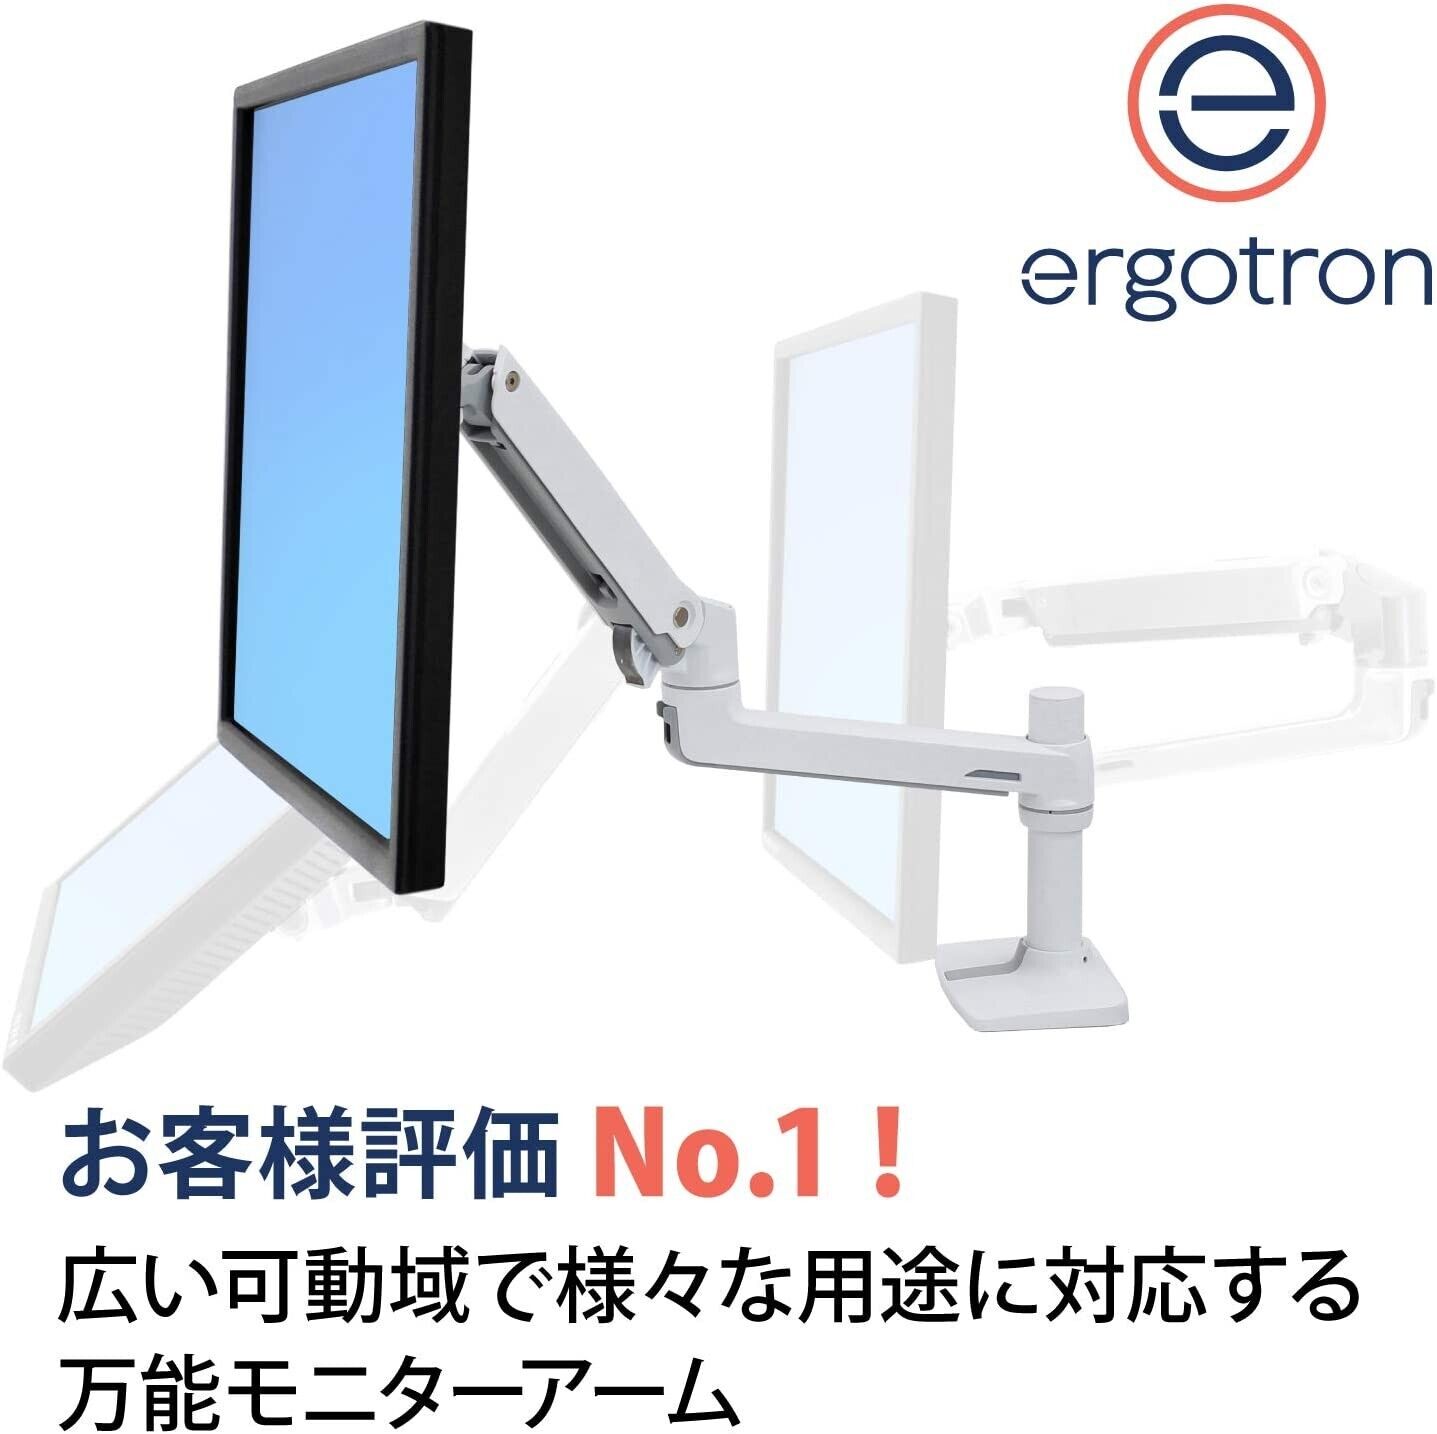 Ergotron LX Desk Monitor Arm White Up to 34 inches (3.2-11.3kg) 45-490-216 New